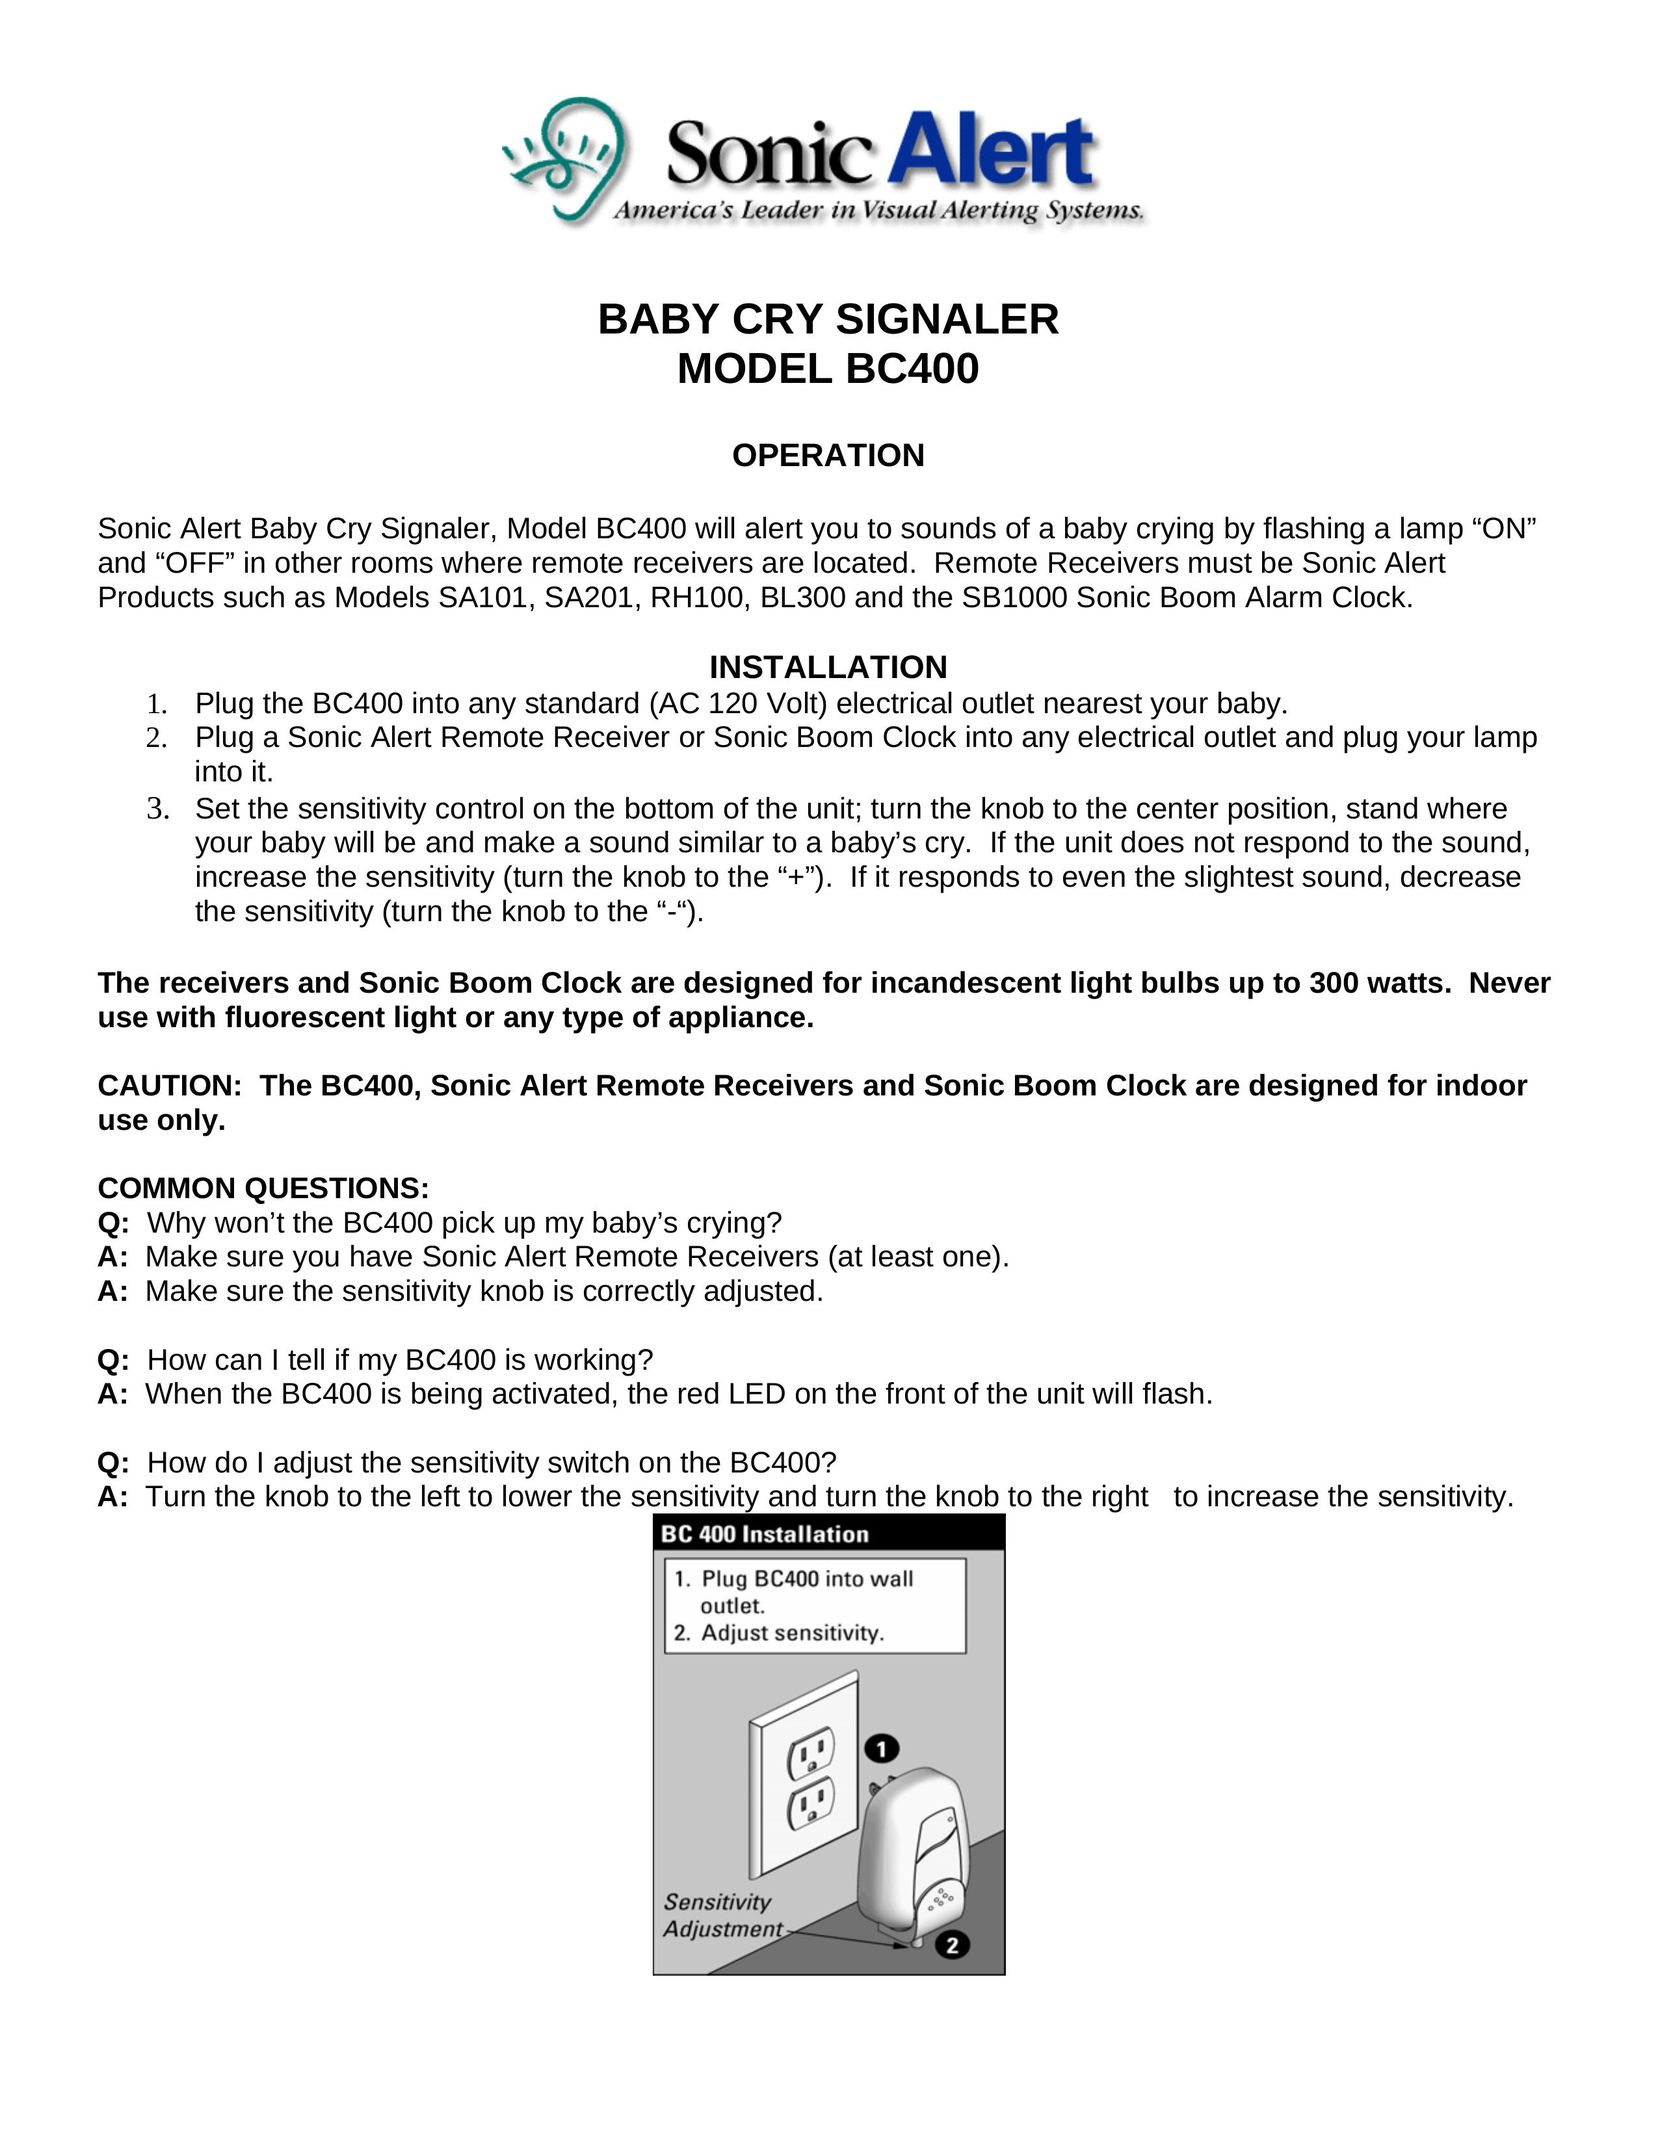 Sonic Alert BL300 Baby Monitor User Manual